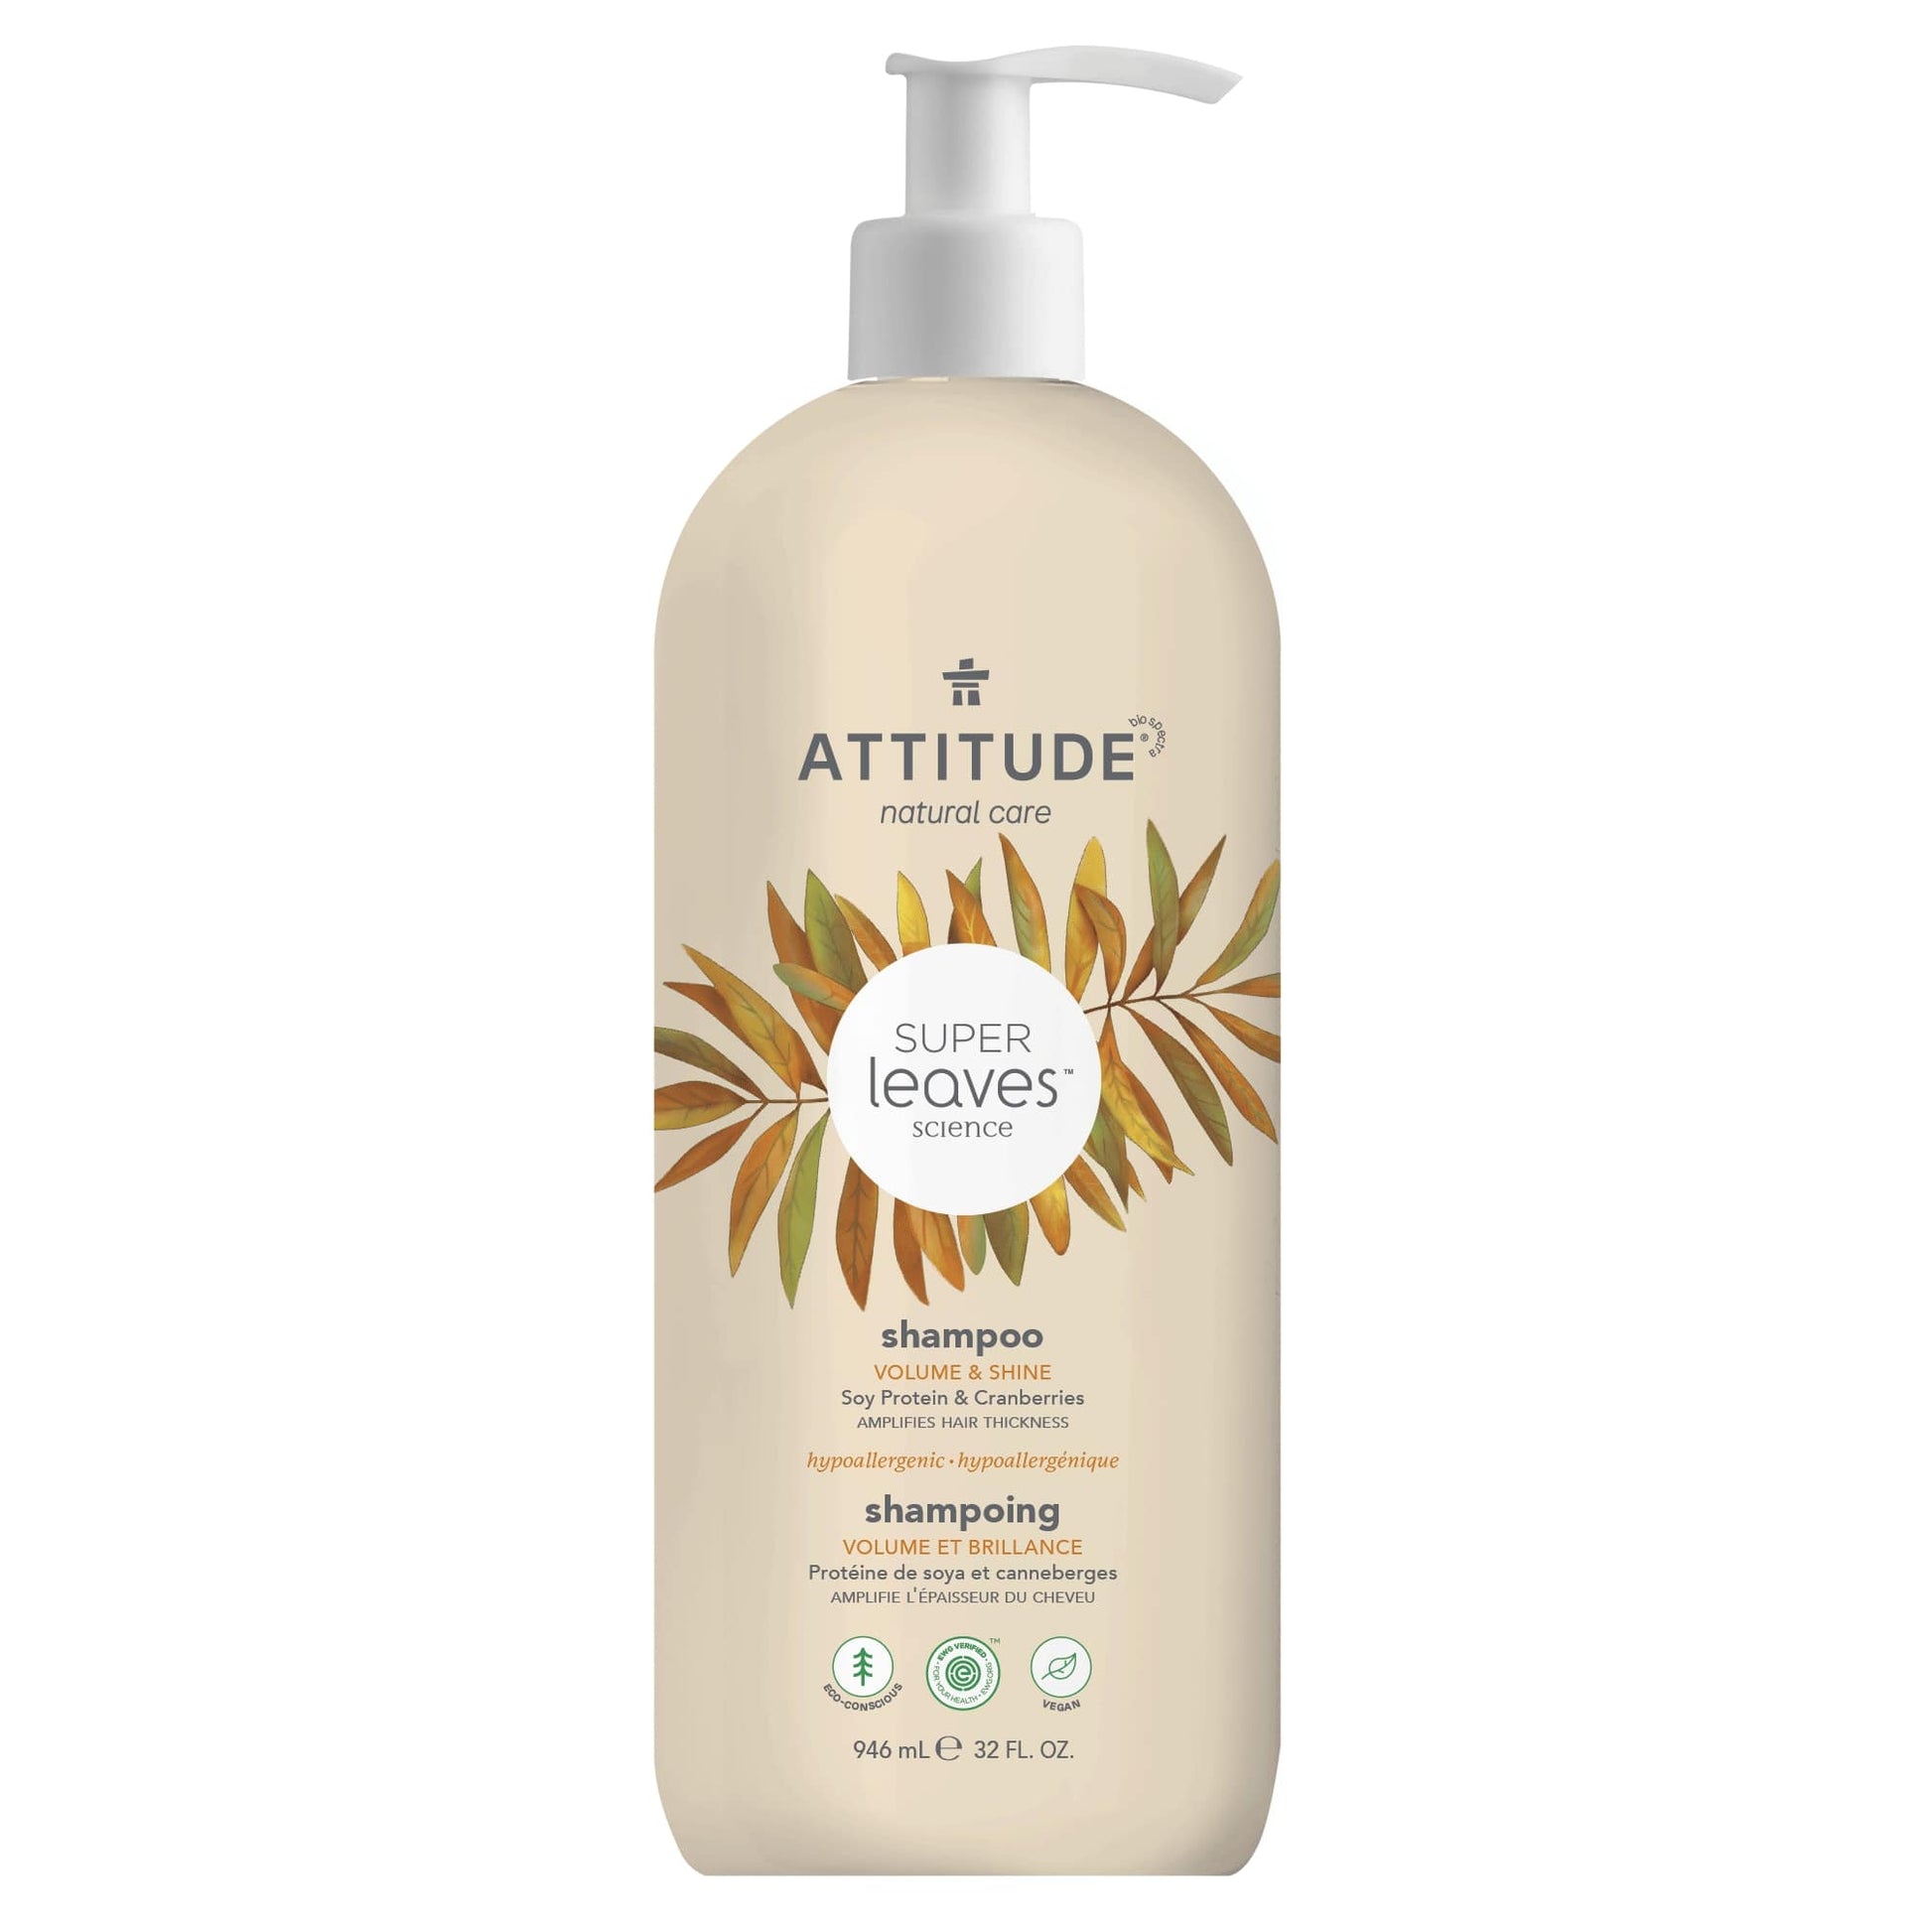 ATTITUDE Super leaves™ 11508 Shampoo Volume & Shine Amplifies hair thickness _en?_hover? 32 FL. OZ.